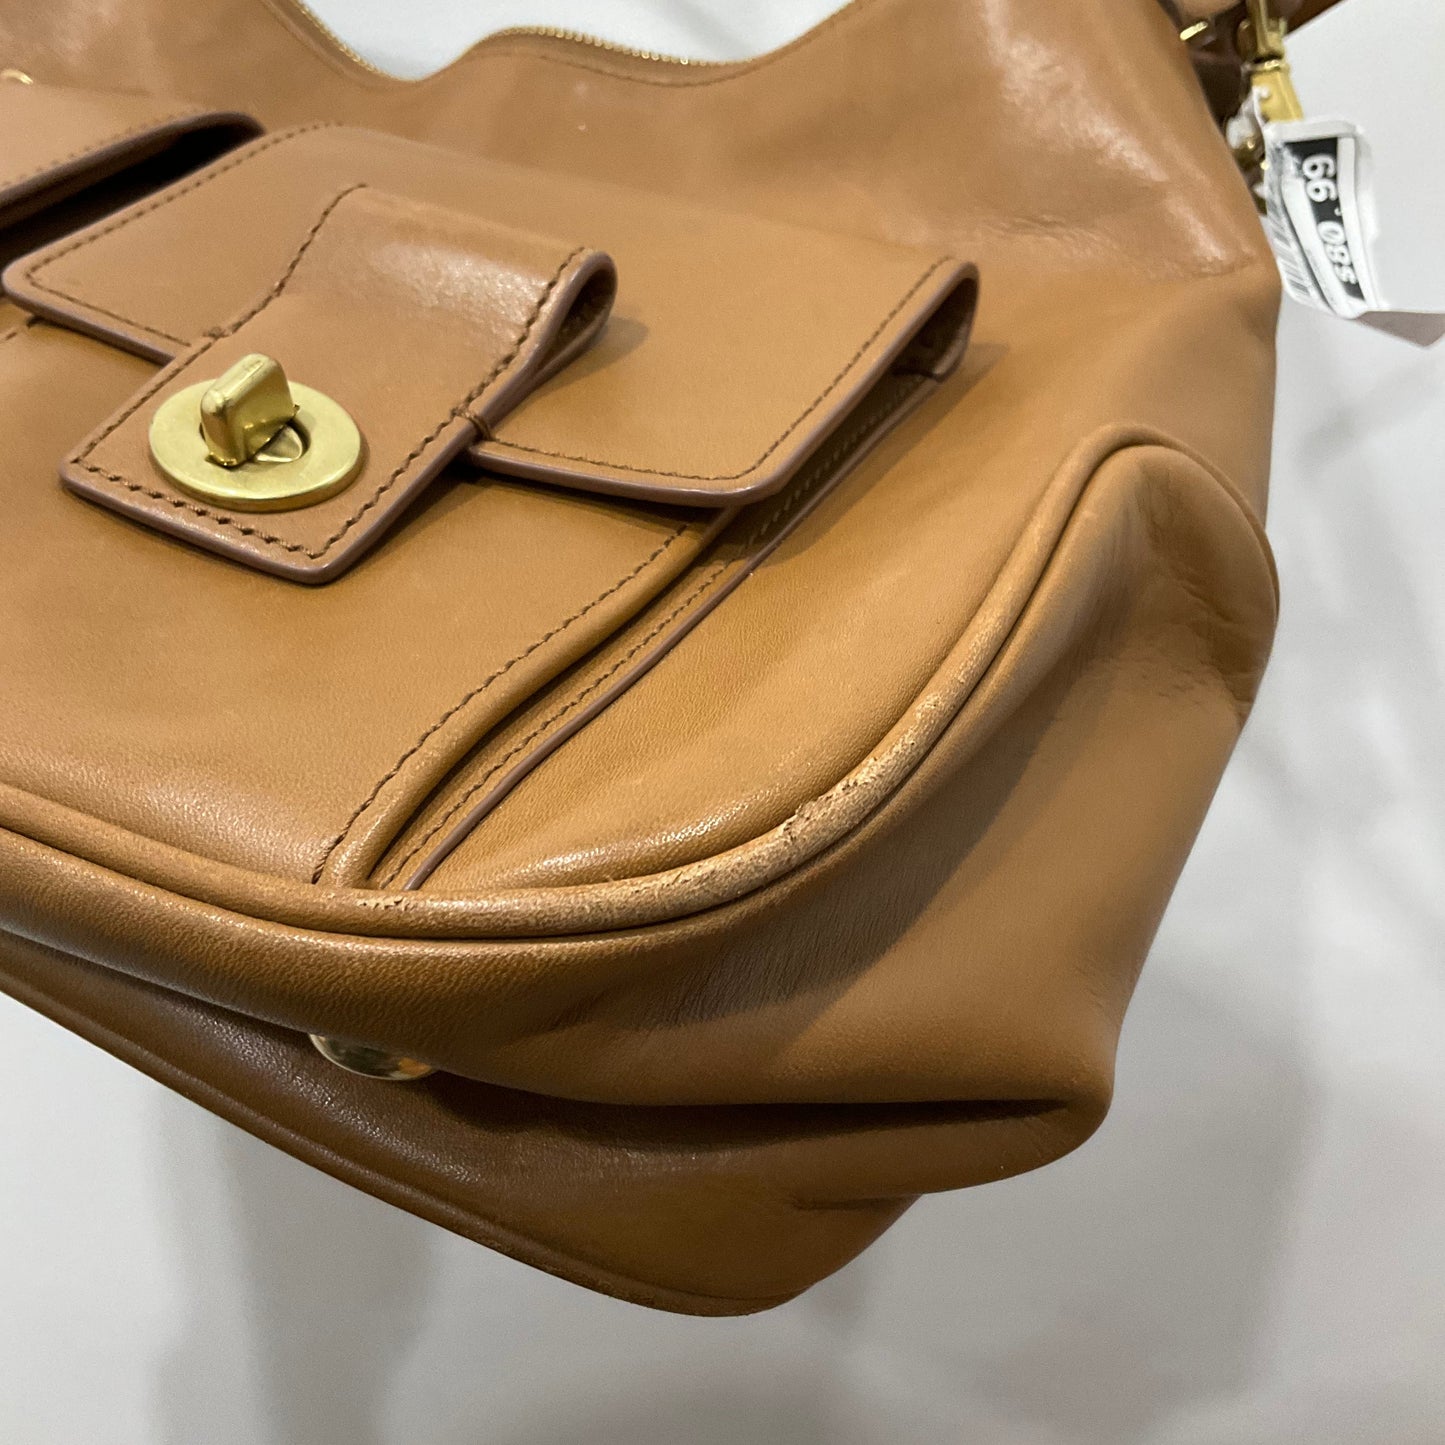 Handbag Designer jw hulme, Size Medium